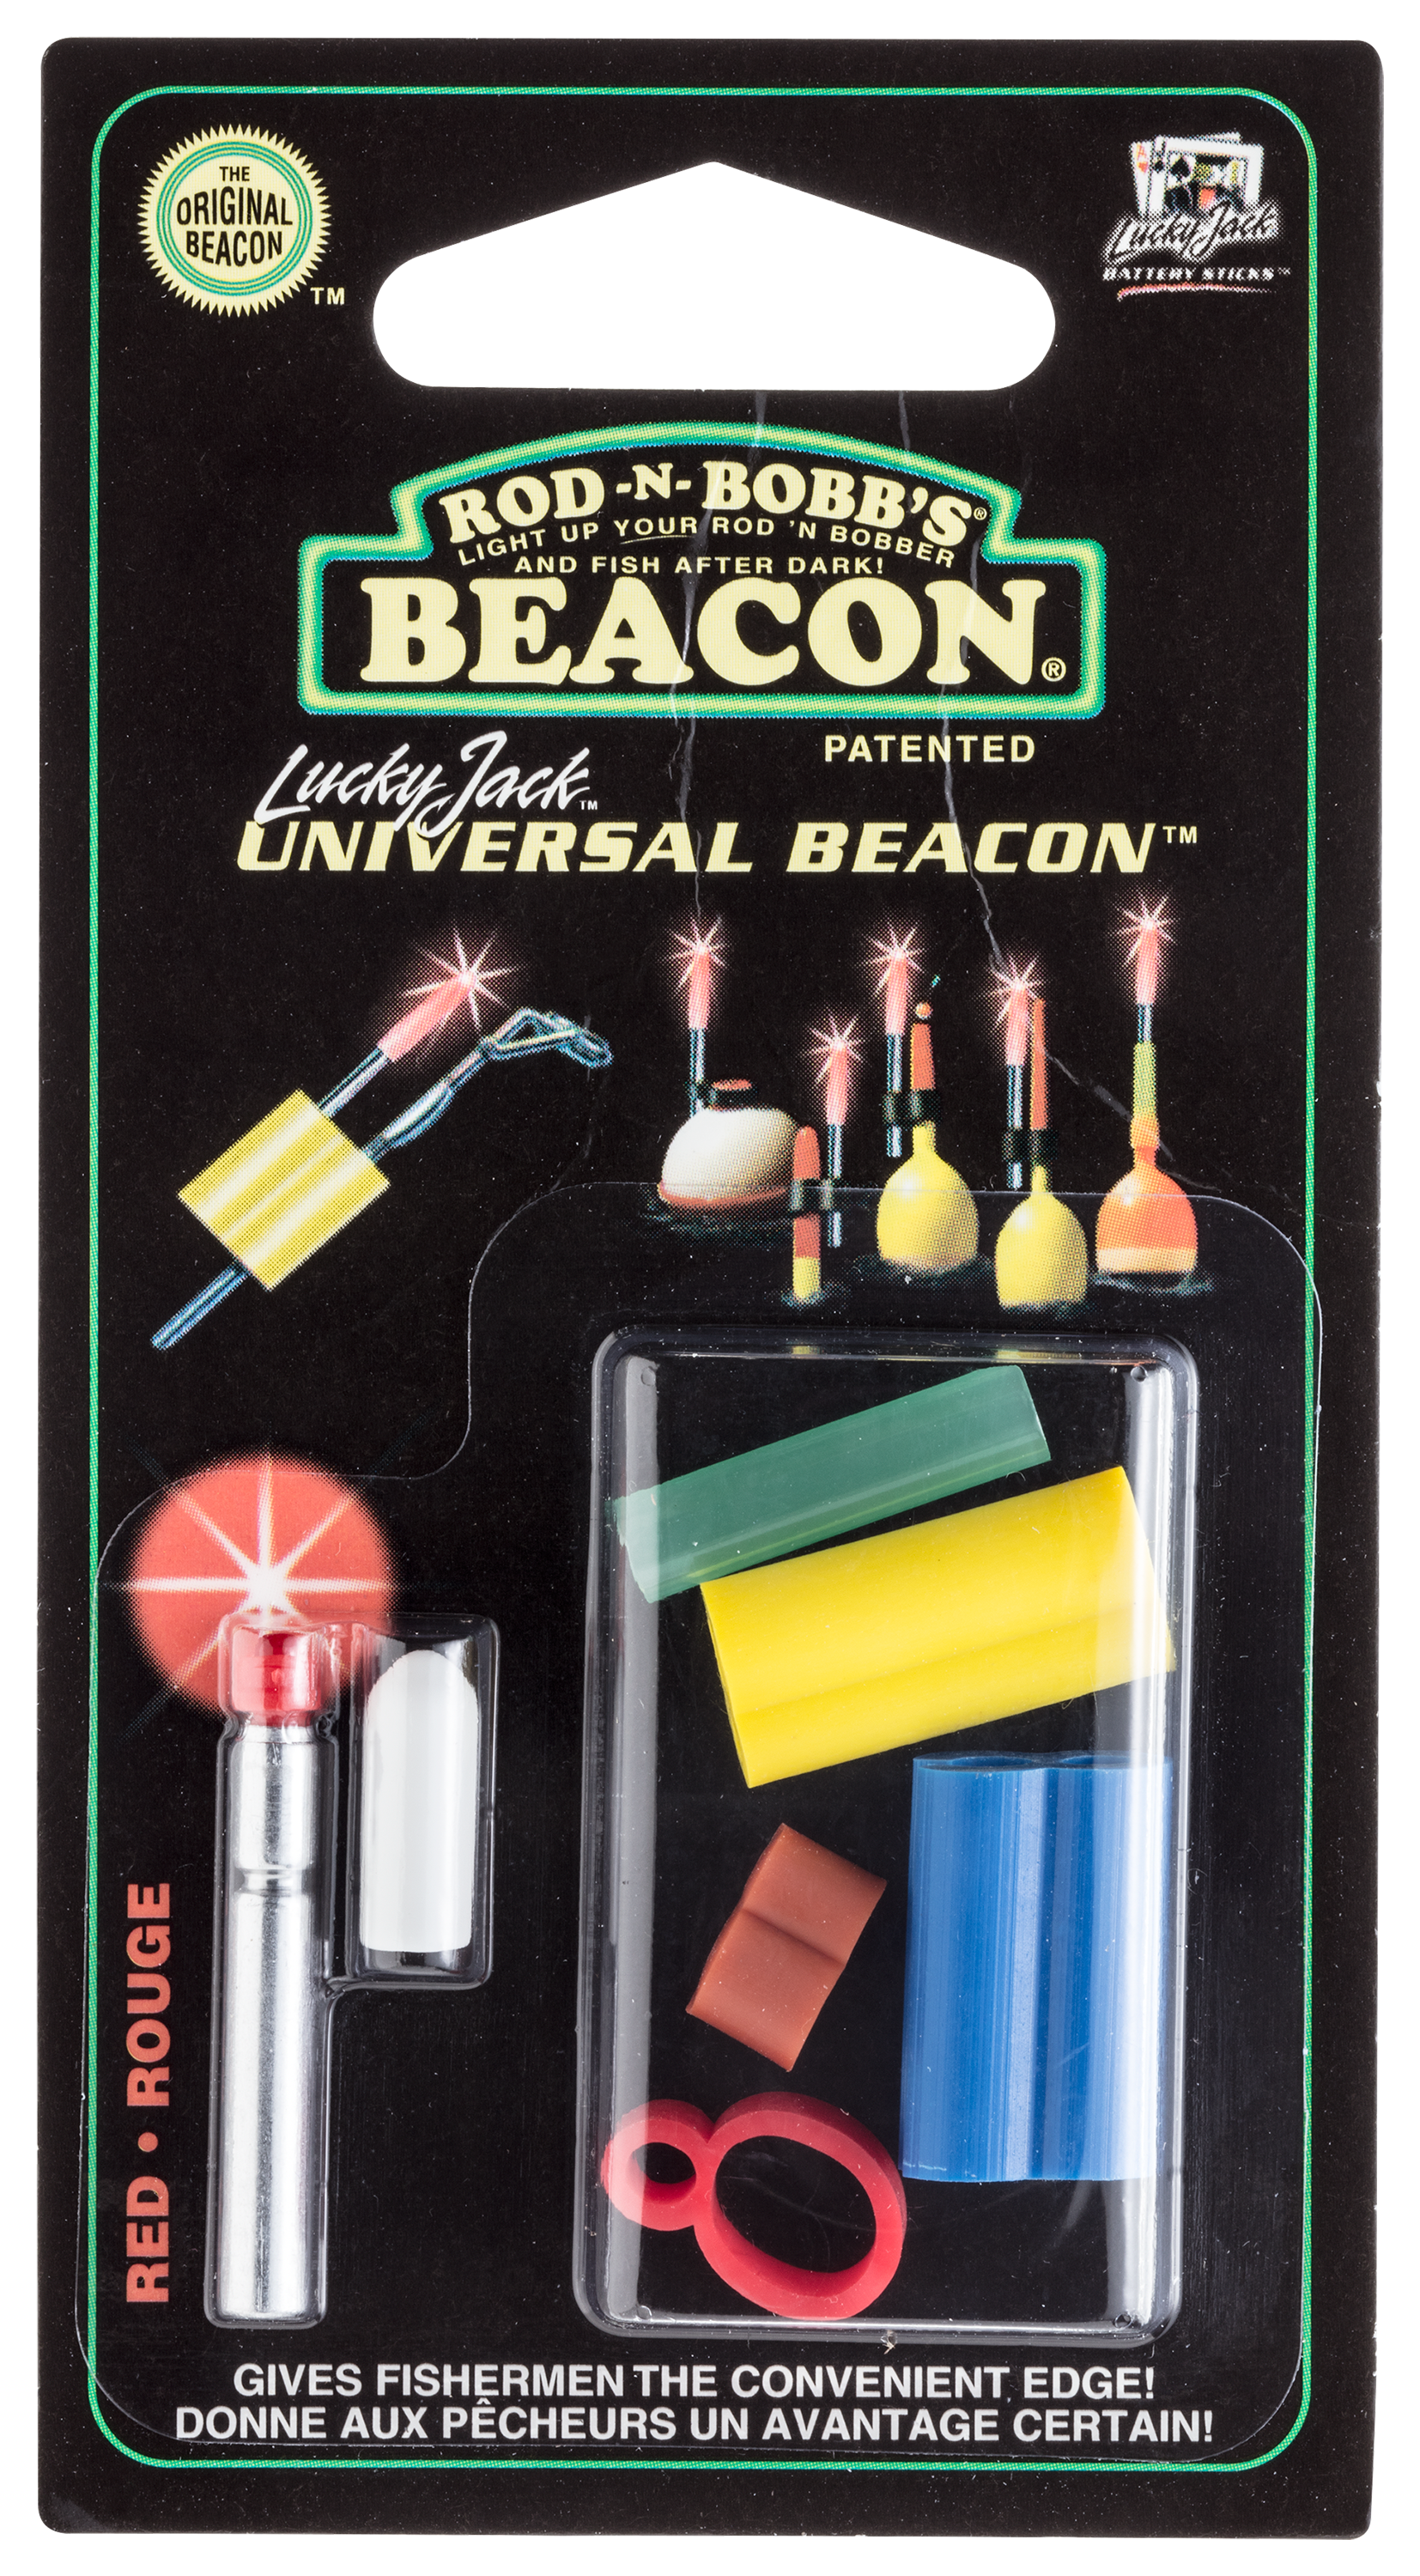 Rod-N-Bobb's Luckyjack Universal Beacon